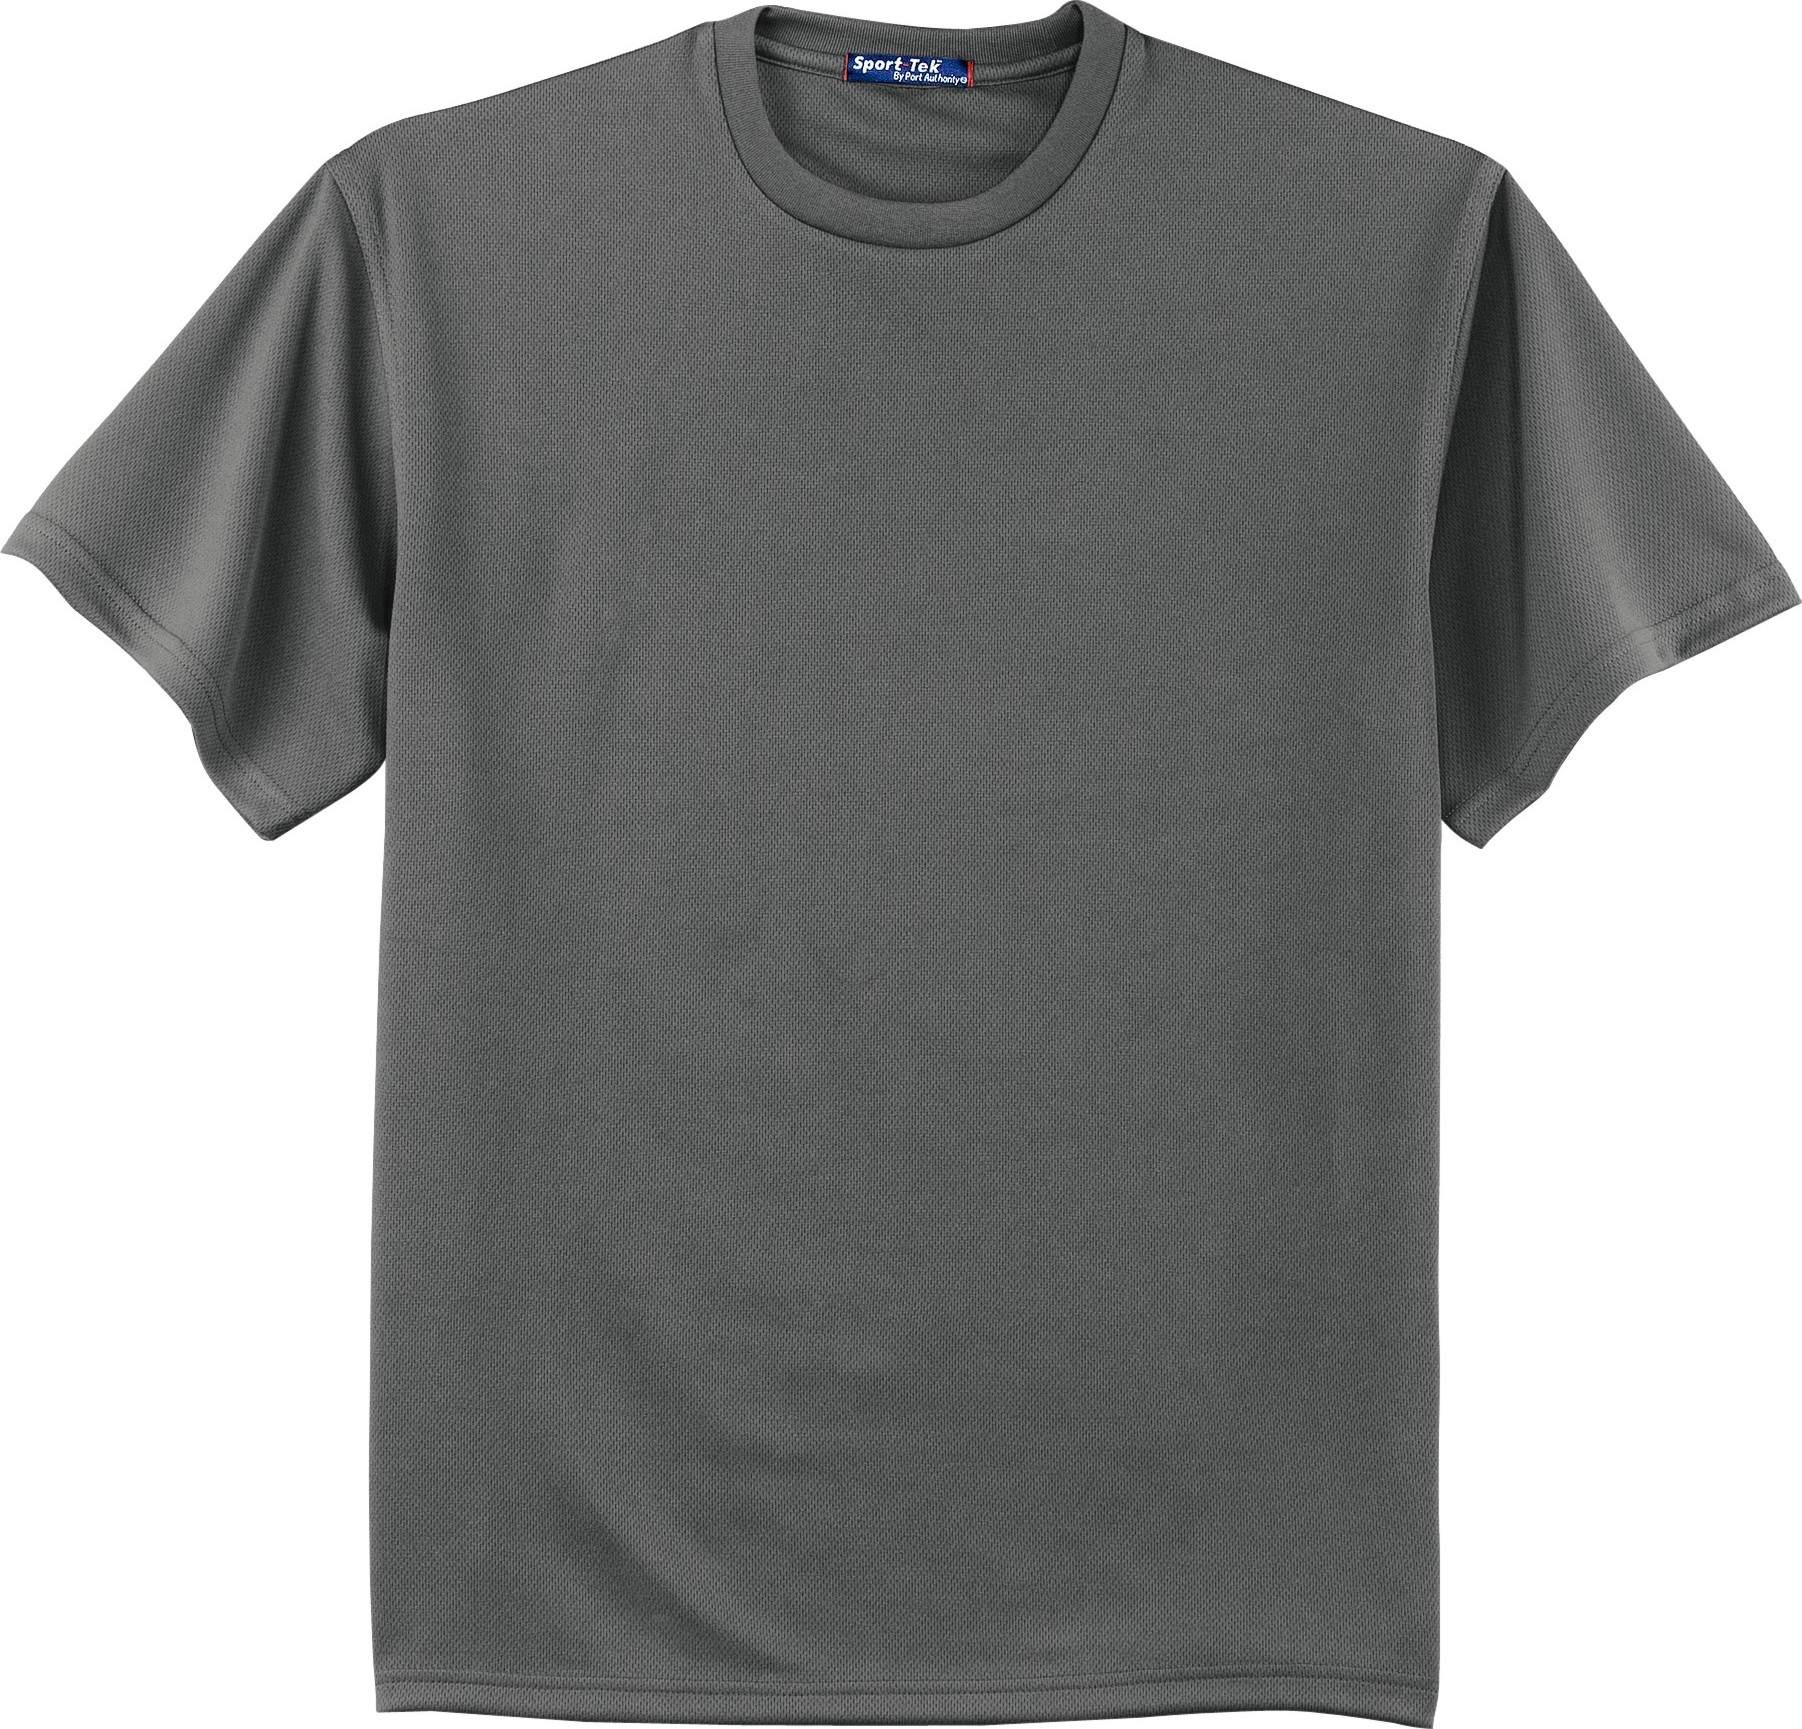 T Shirt Template Grey